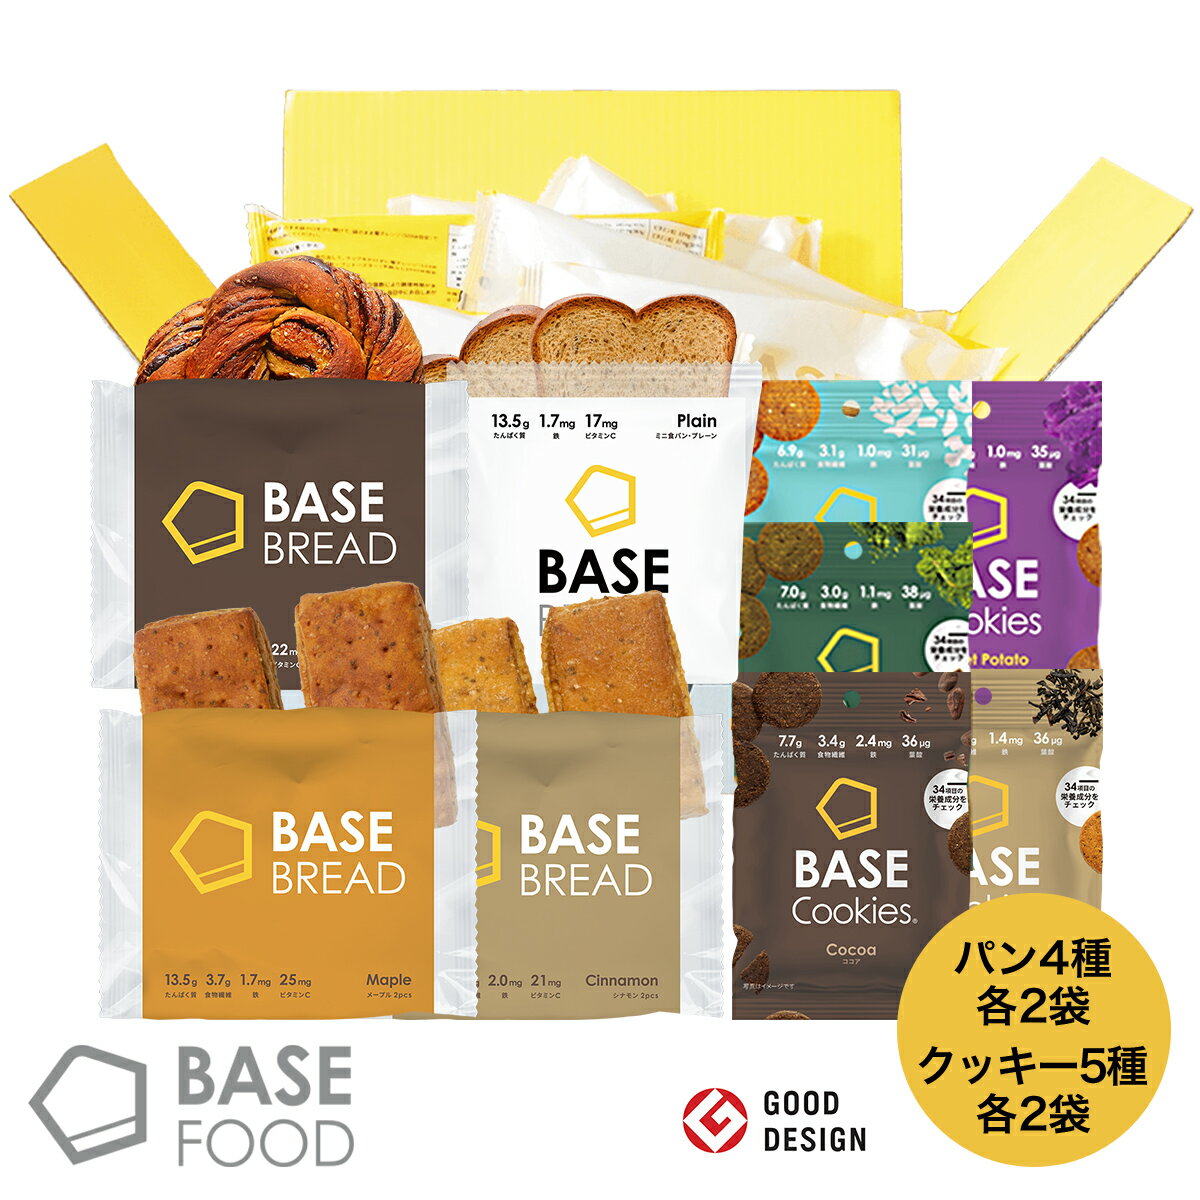 BASE BREAD& BASE Cookiesセット ミニ食パン チョコレート メープル シナモン 各2袋 クッキー ココア アールグレイ さつまいも ココナッツ 抹茶 完全栄養食 | basefood 栄養 置き換え ダイエット